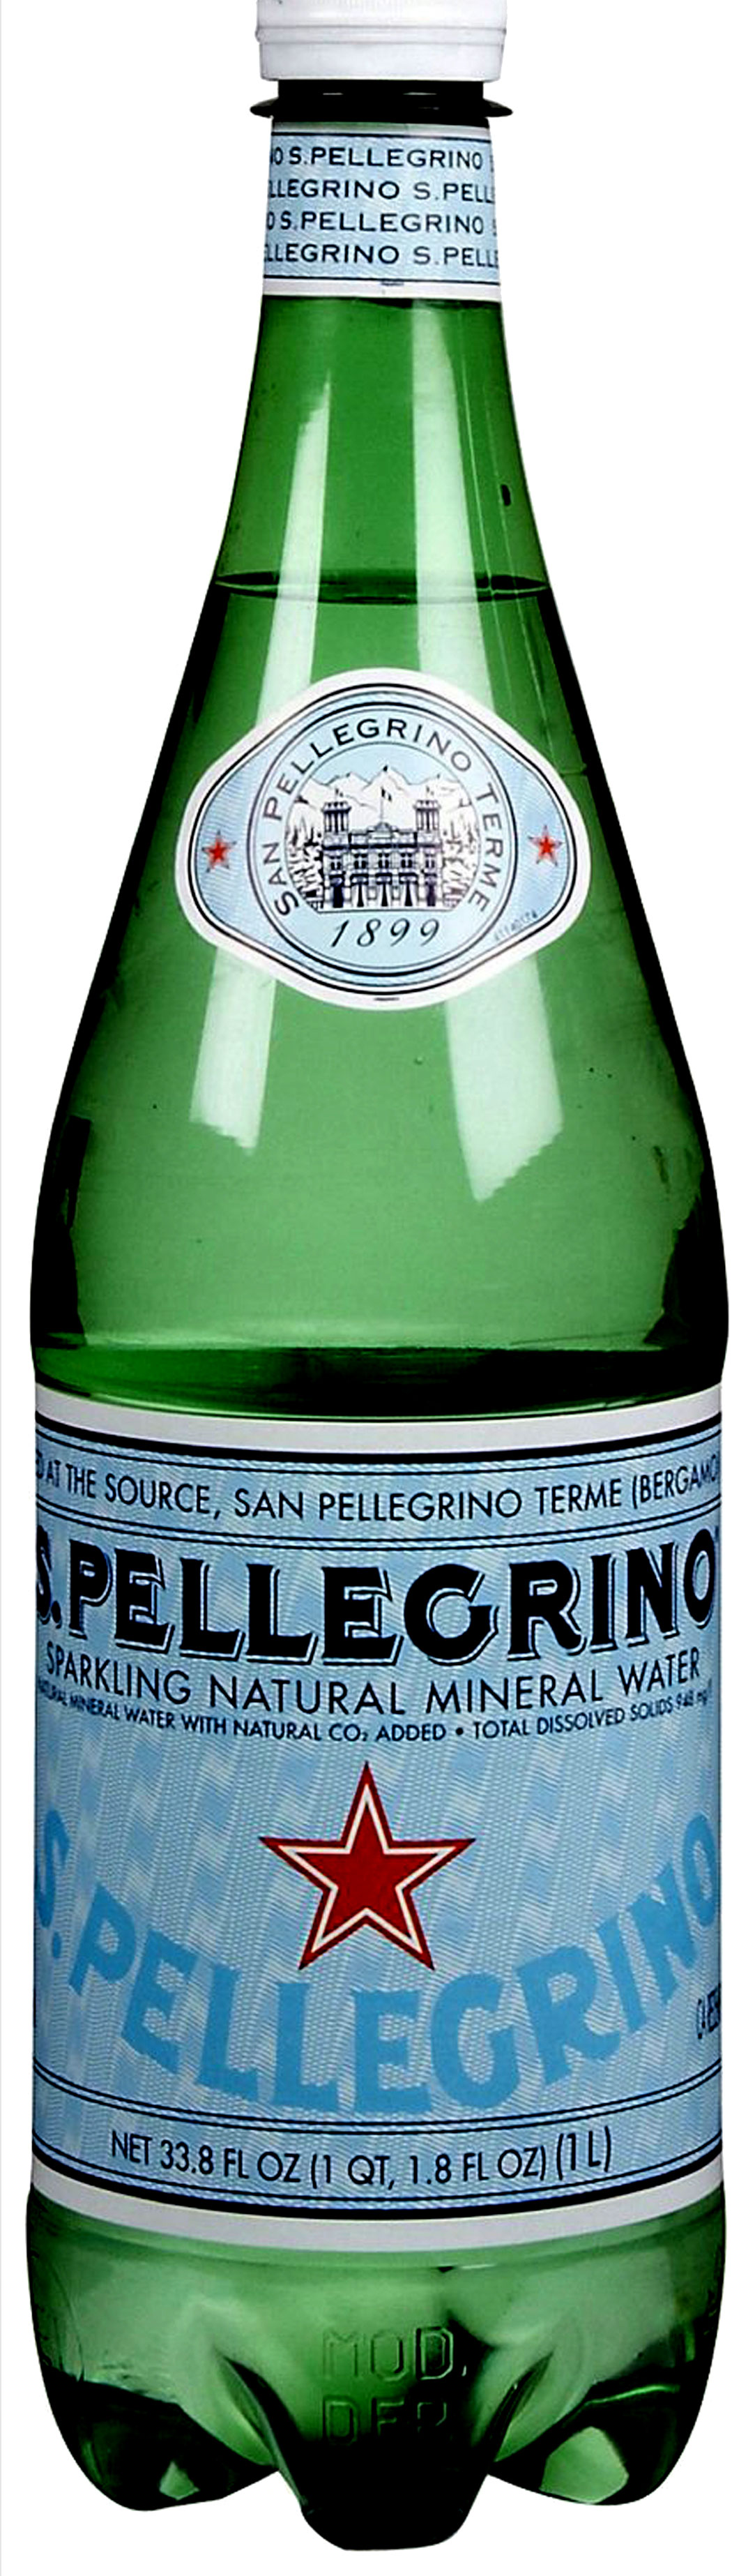 Pellegrino Water Bottle